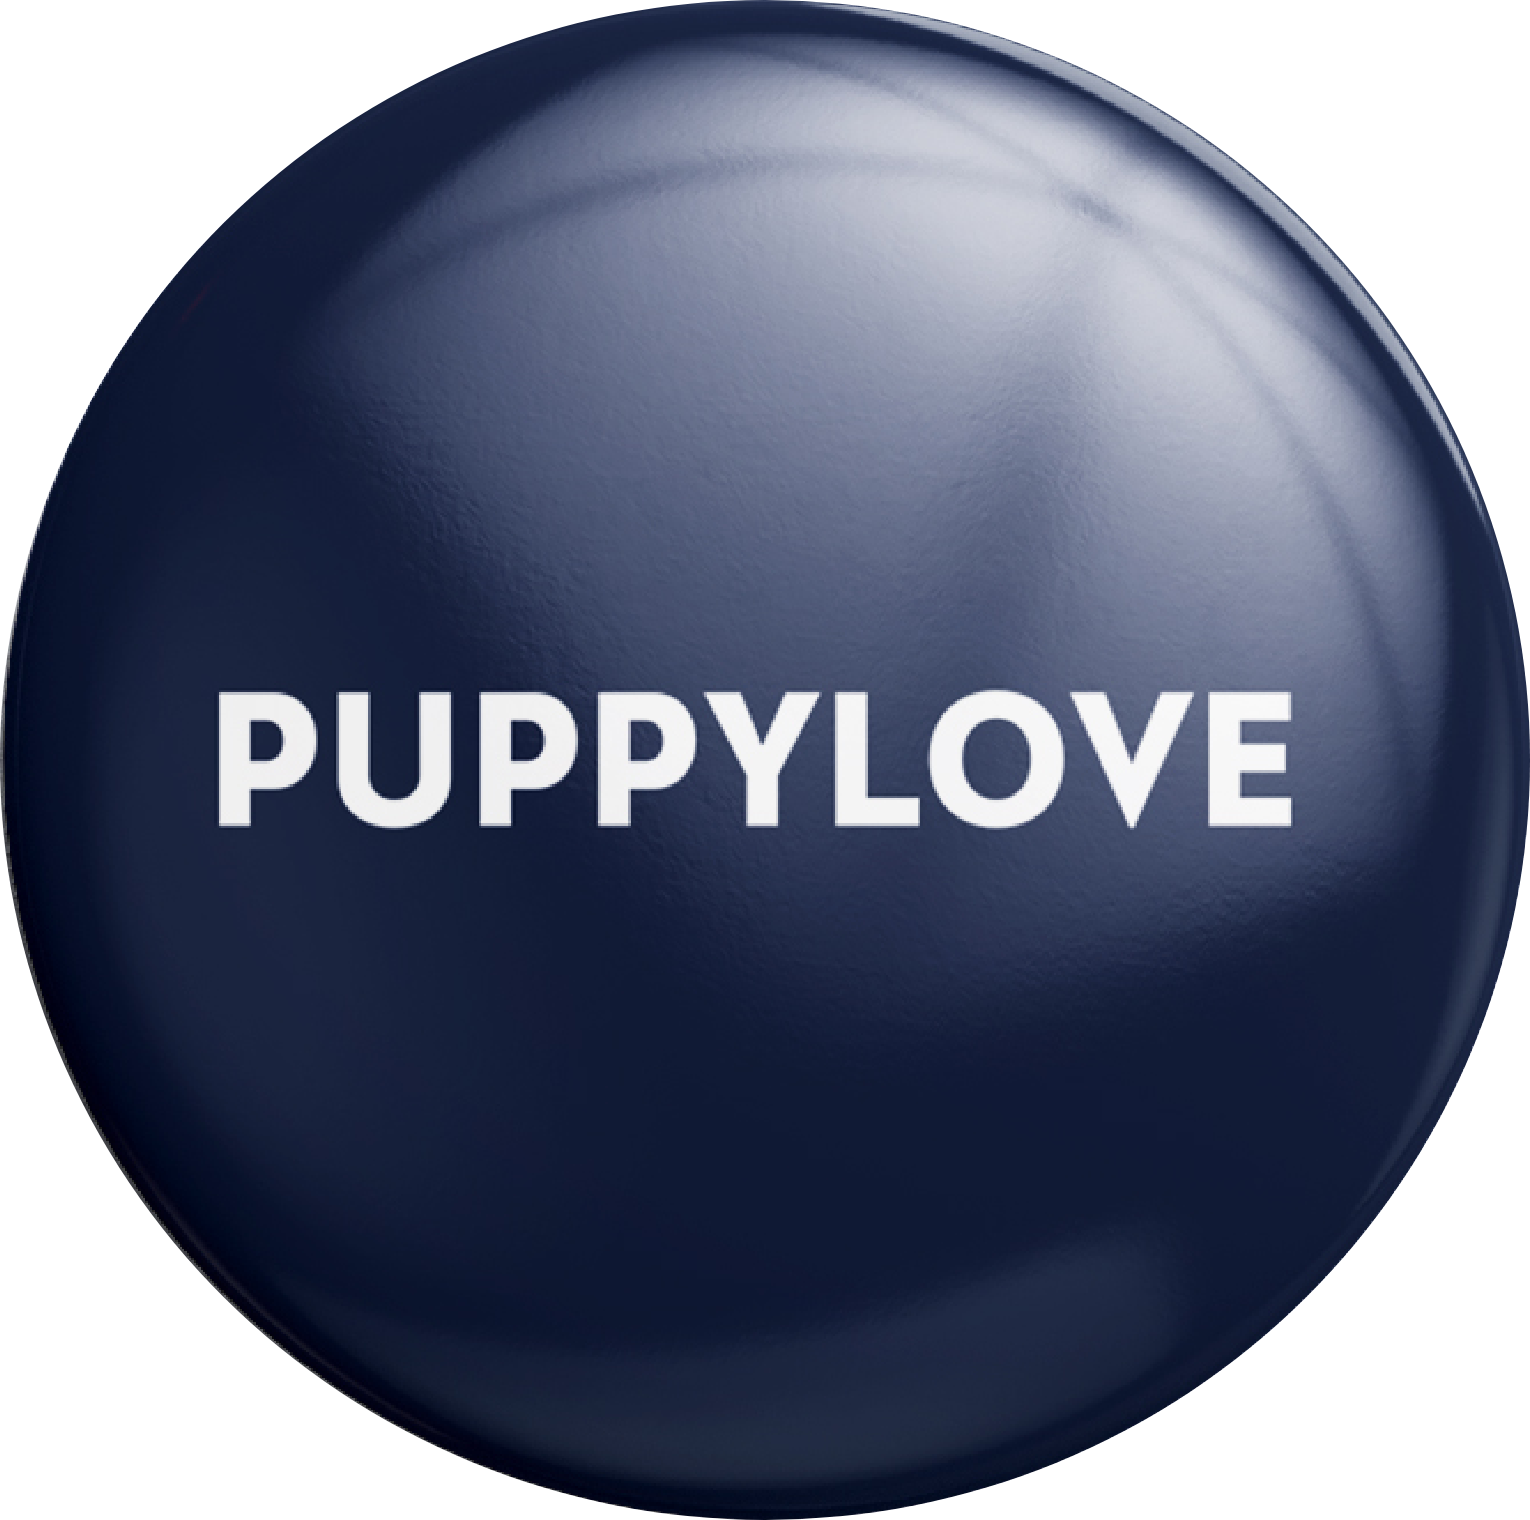 patrick_morvan_UI_Designer_Puppy_Love_Pins_1